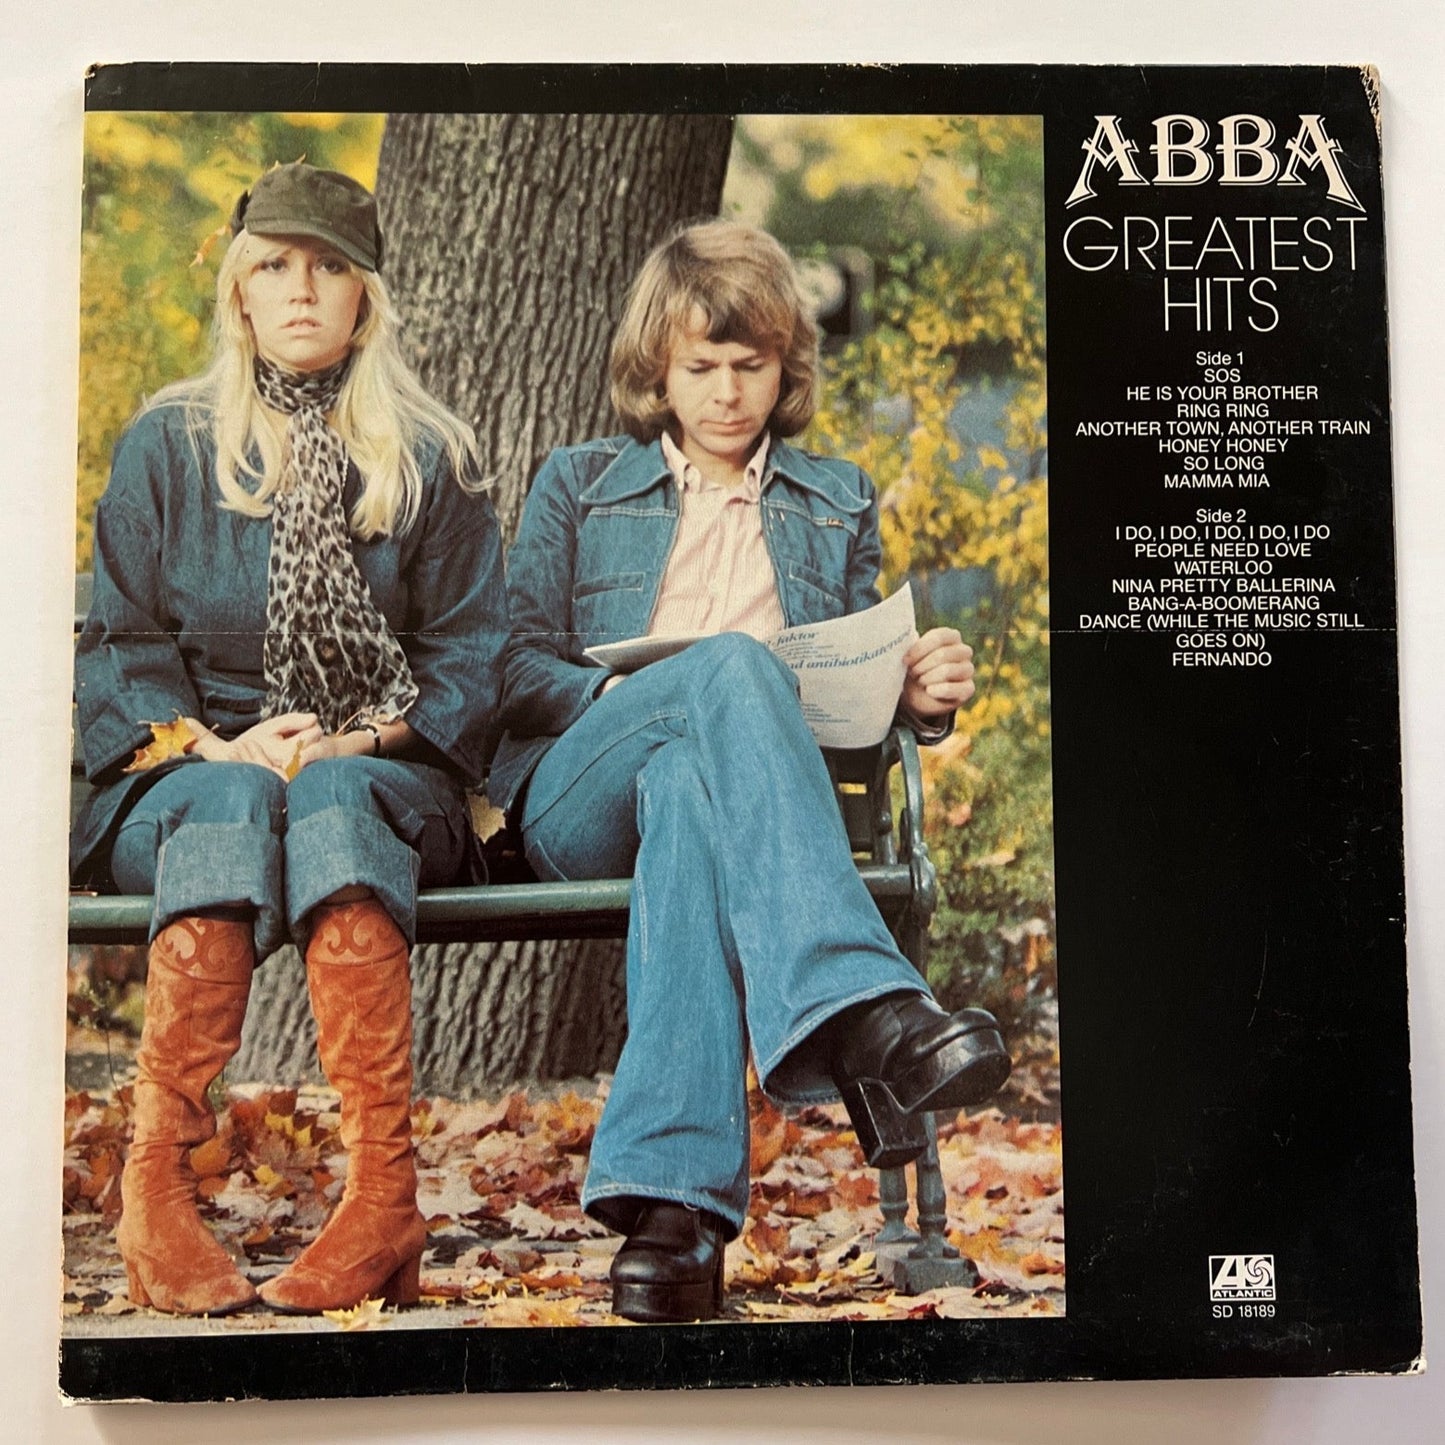 ABBA “Greatest Hits”